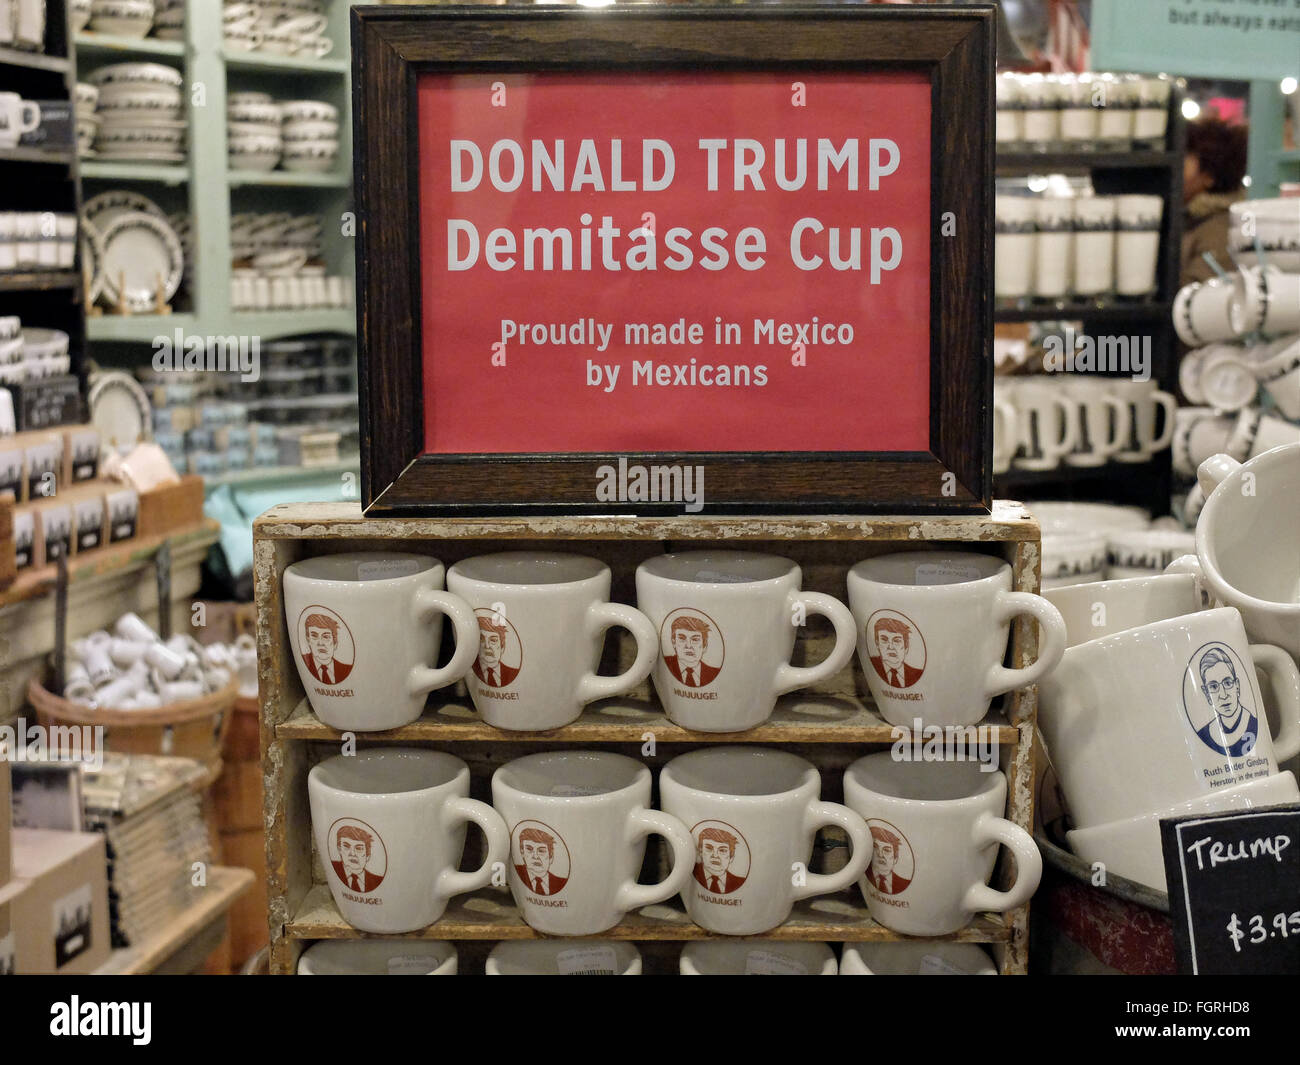 https://c8.alamy.com/comp/FGRHD8/trump-demitasse-coffee-mugs-made-in-mexico-for-sale-at-fishs-eddy-FGRHD8.jpg